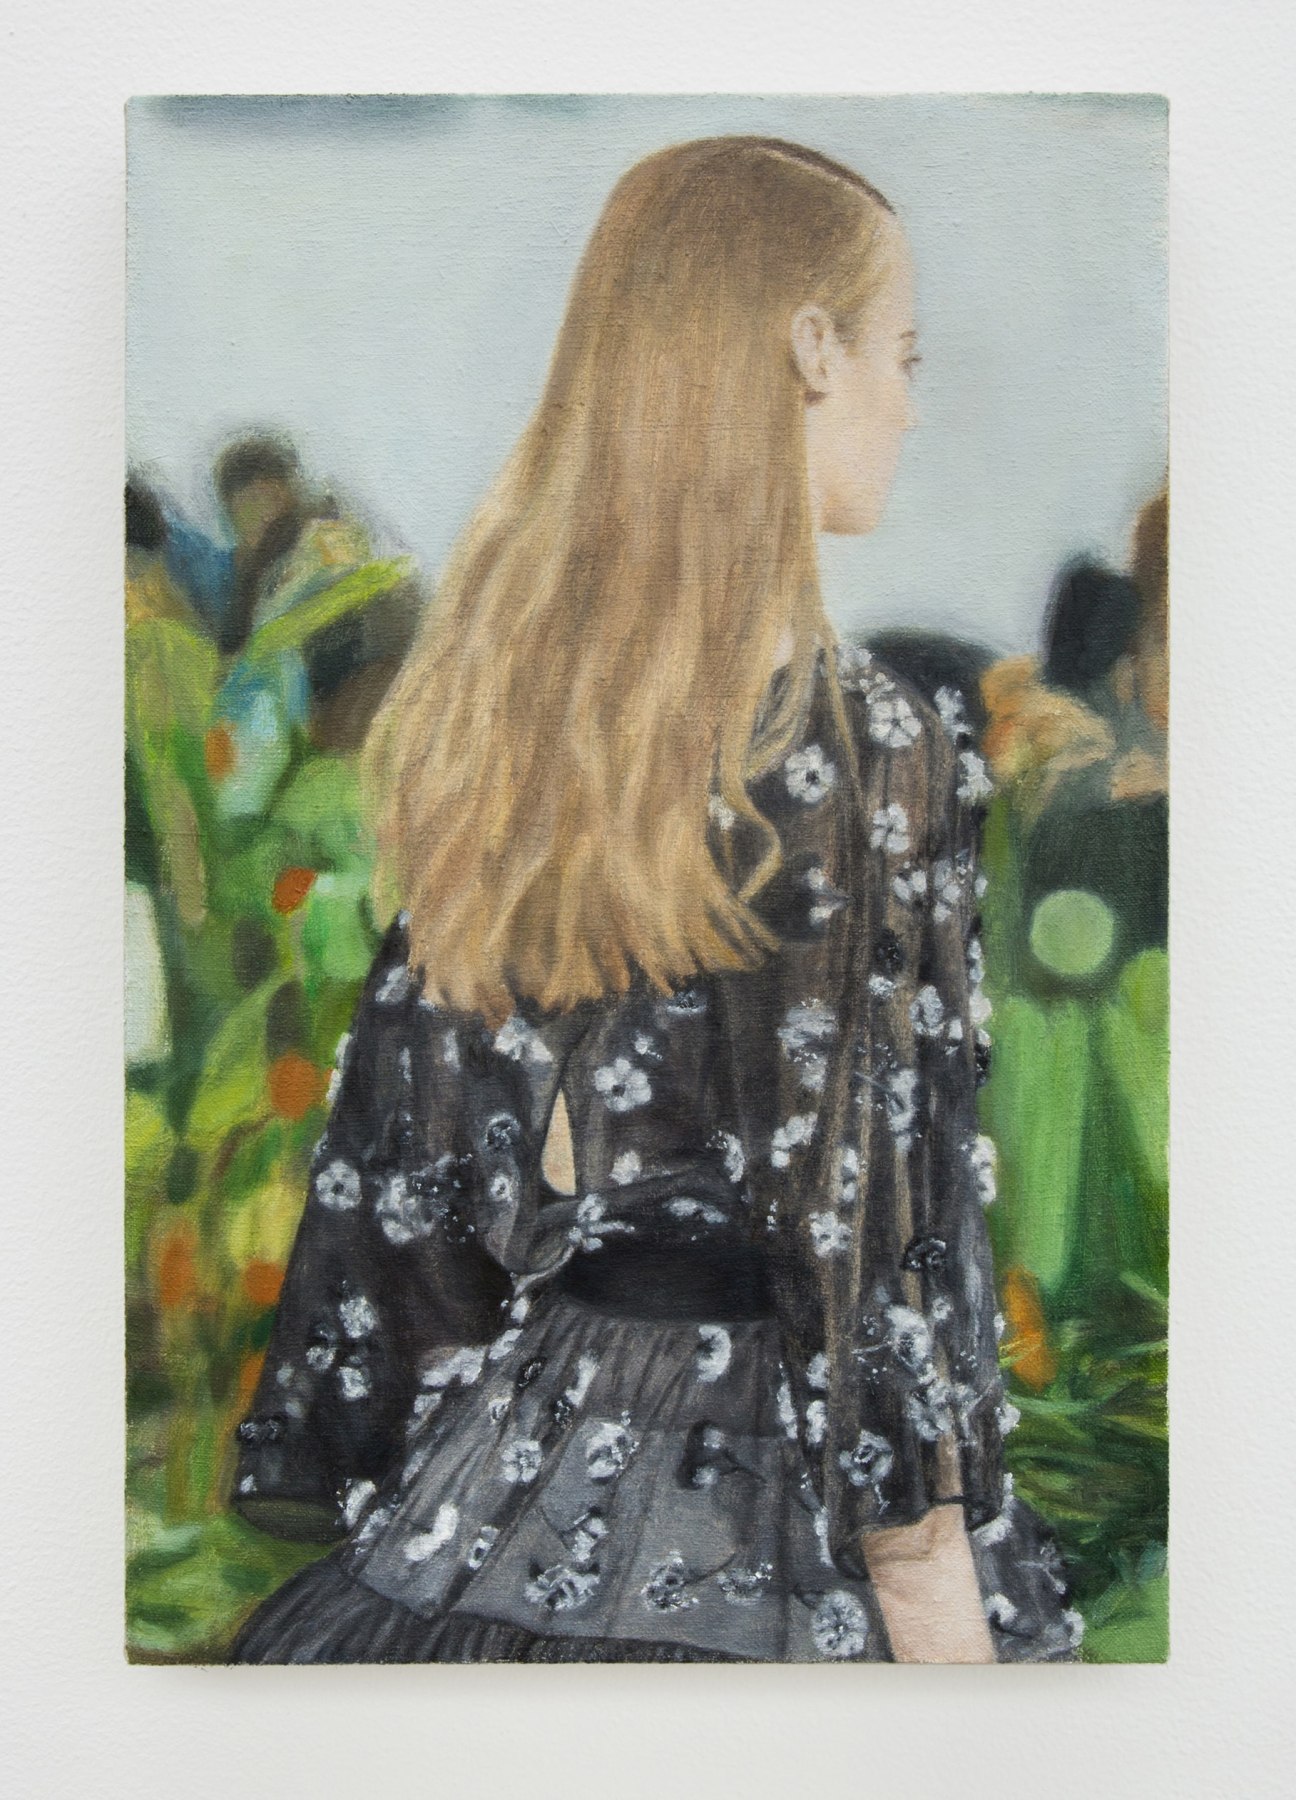 Michelle Rawlings, "Untitled", Artwork